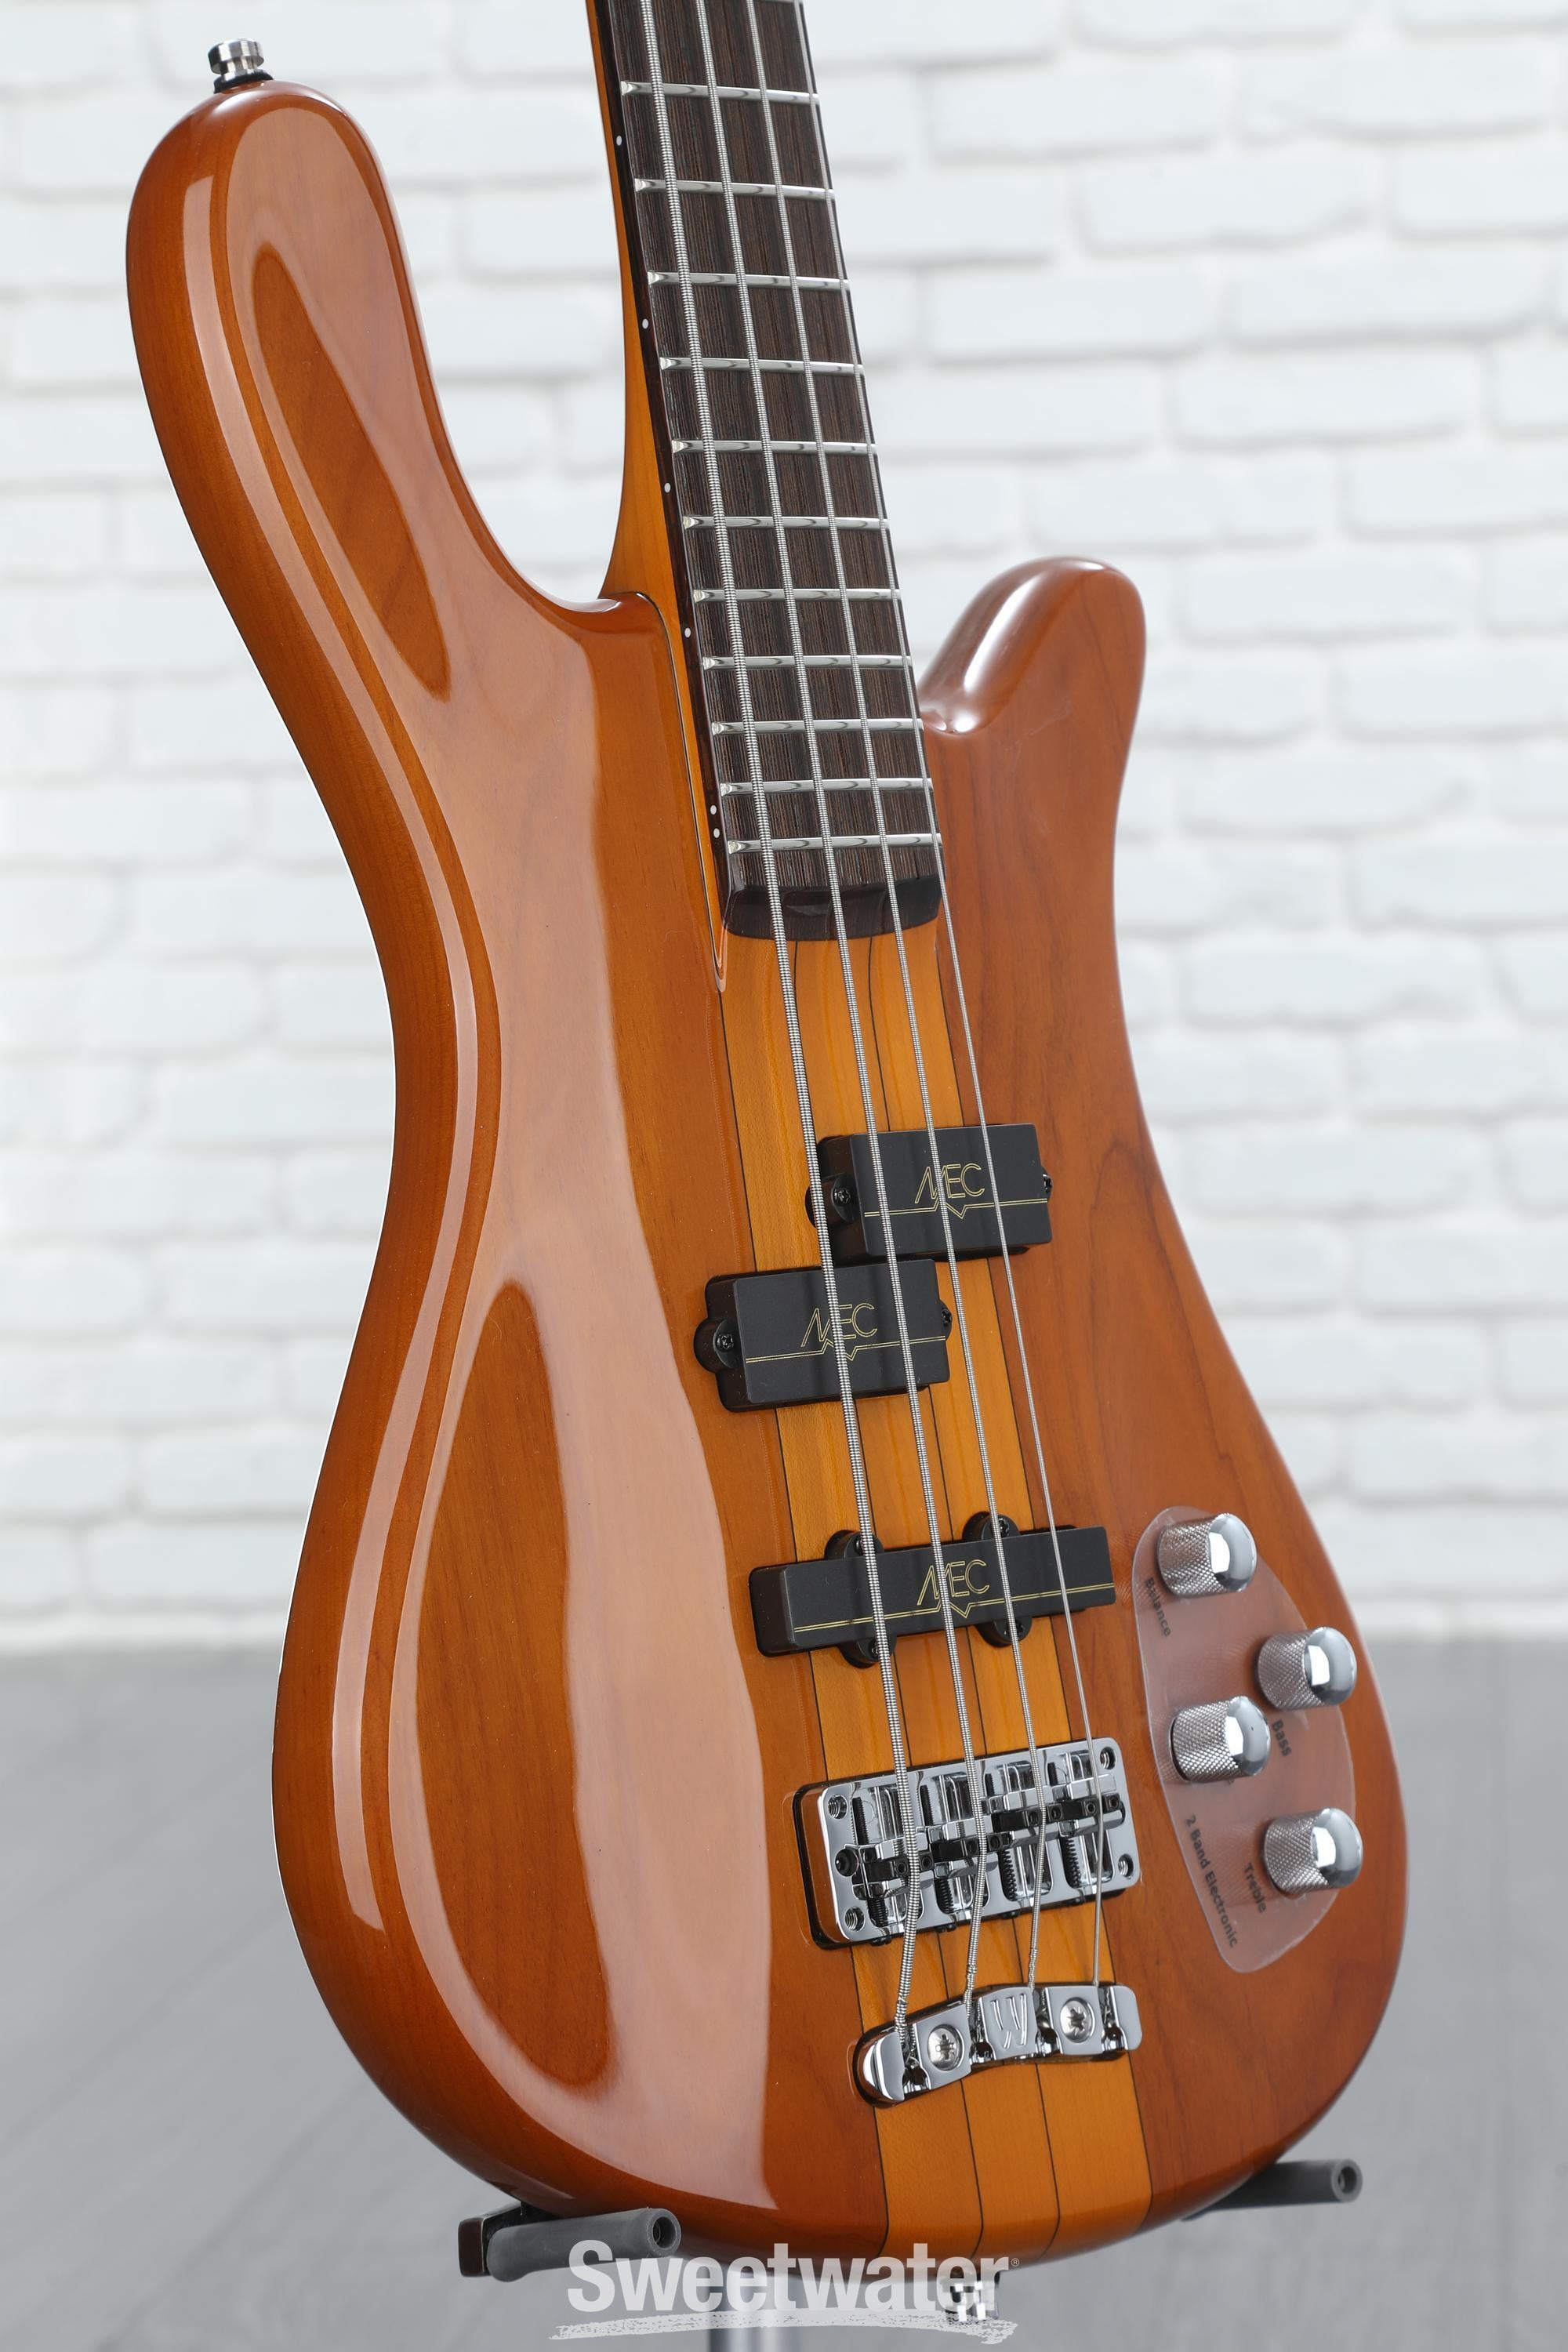 Warwick RockBass Streamer NT I 4-string Bass Guitar - Honey Violin